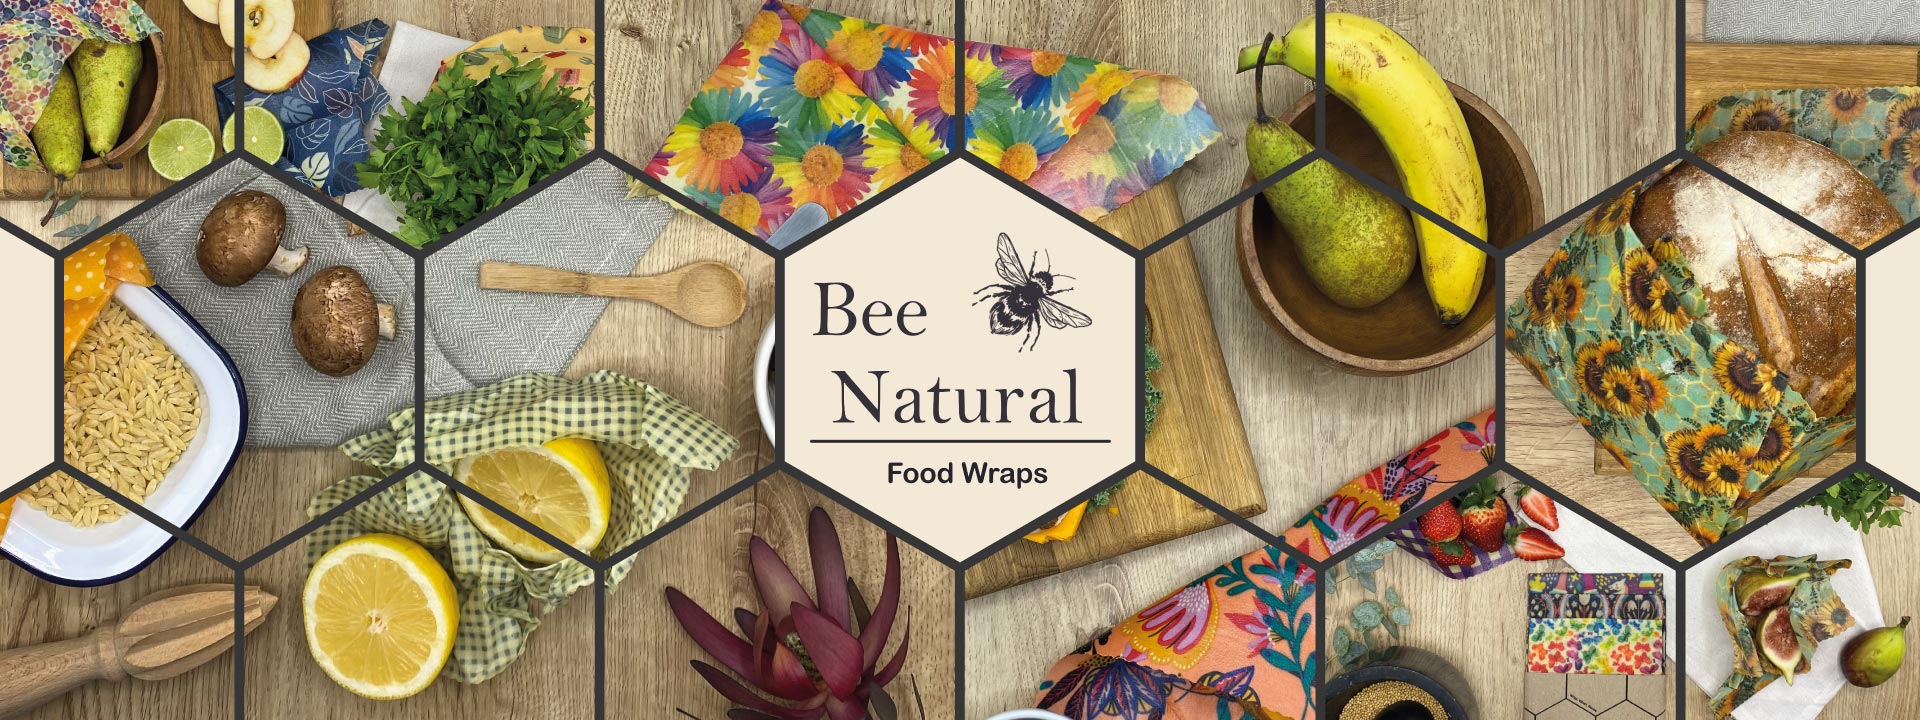 BeeNatural Wraps - Handmade Beeswax Food Wraps